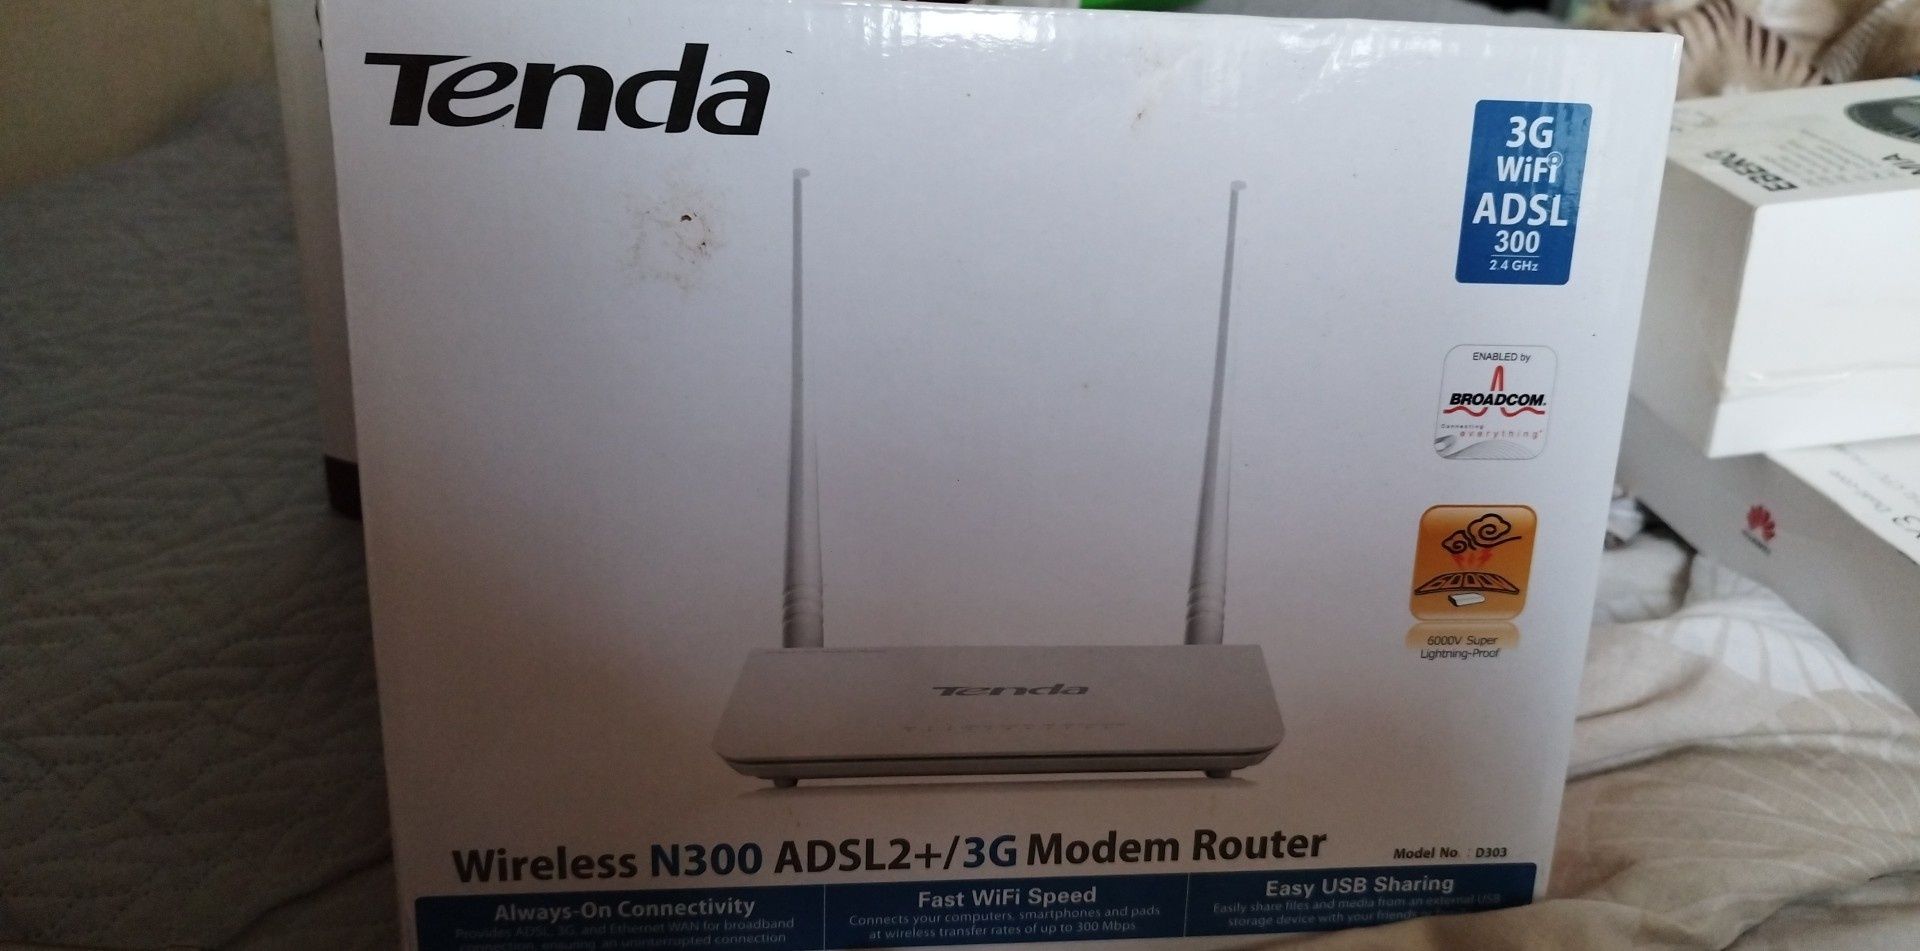 Wireless N300 ADSL2+/3G Modem Router